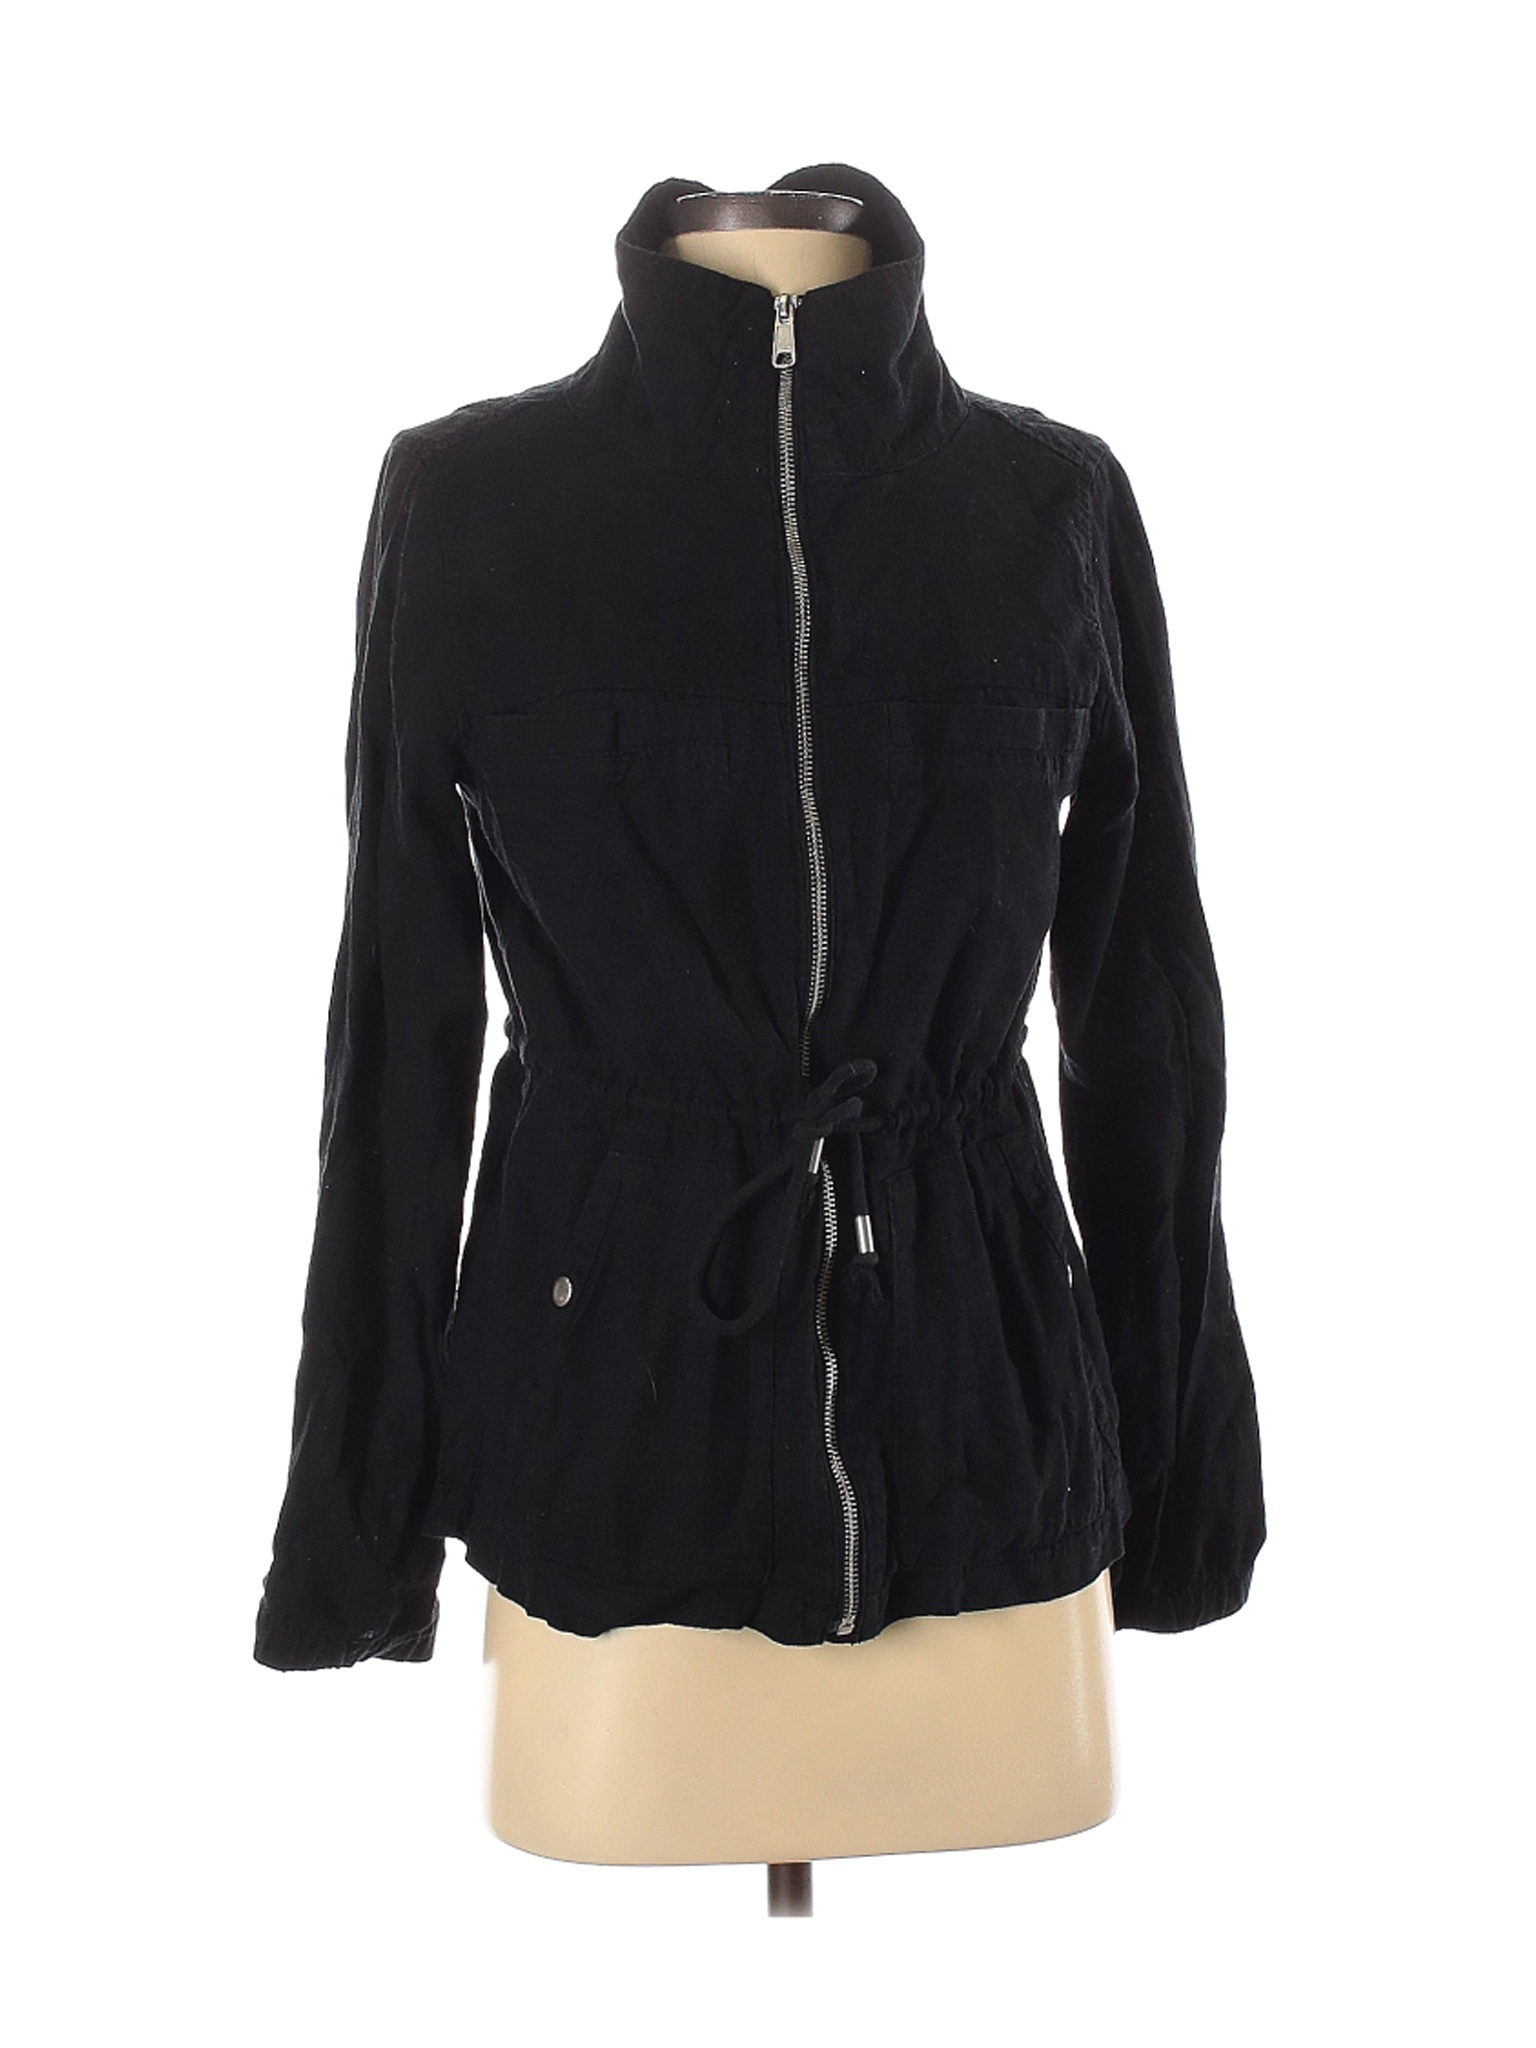 Old Navy Women Black Jacket S | eBay